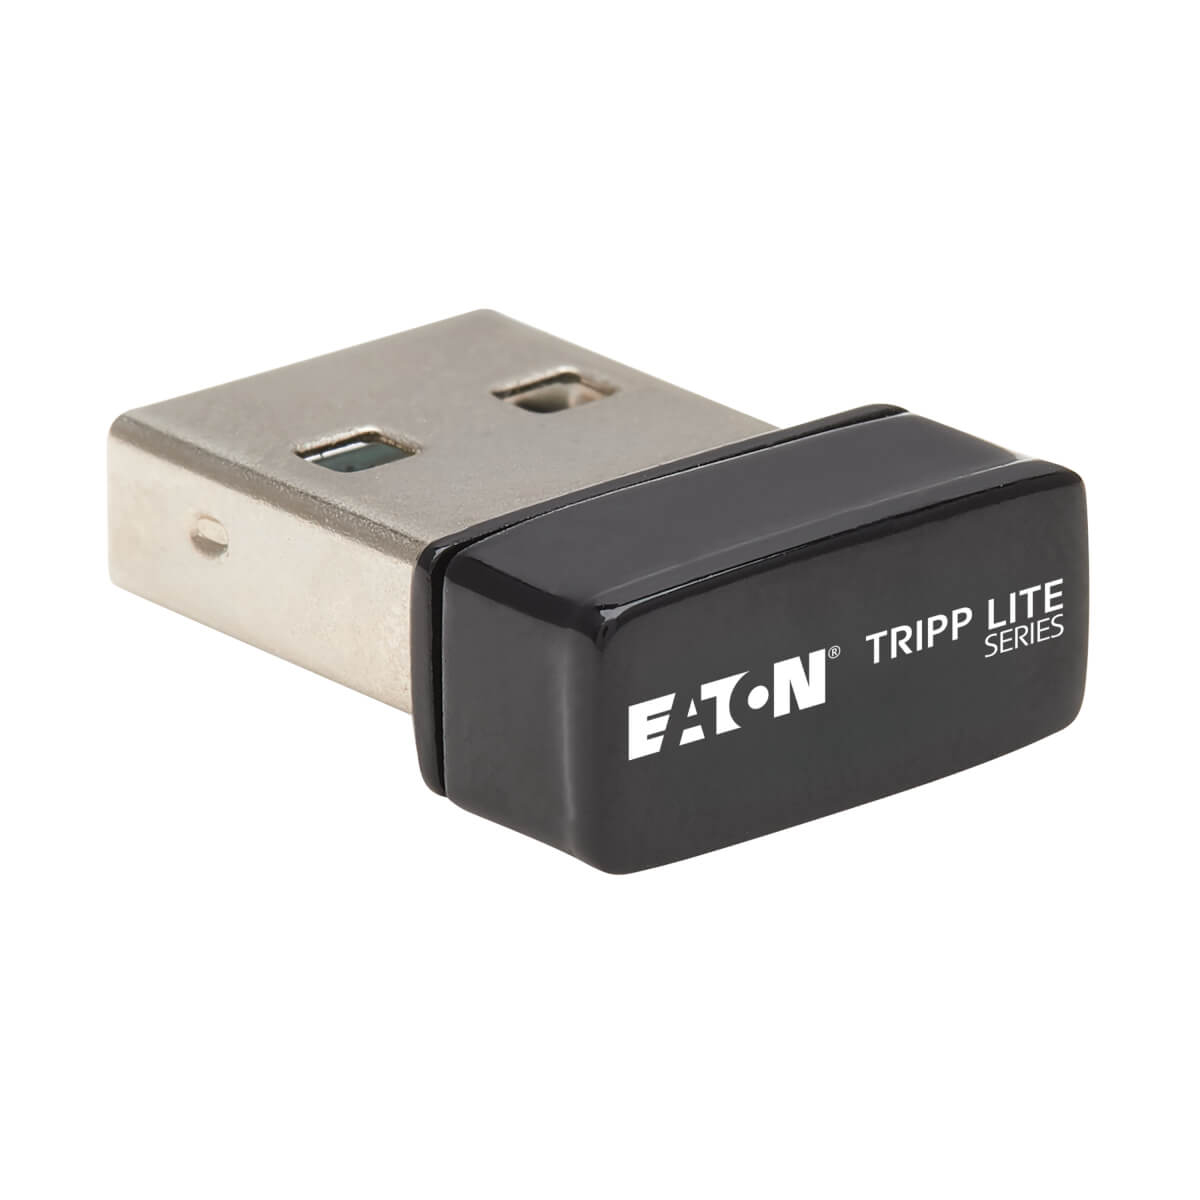 Photos - Network Card TrippLite Tripp Lite U263-AC600 Dual-Band USB Wi-Fi Adapter - 2.4 GHz and 5 GHz 